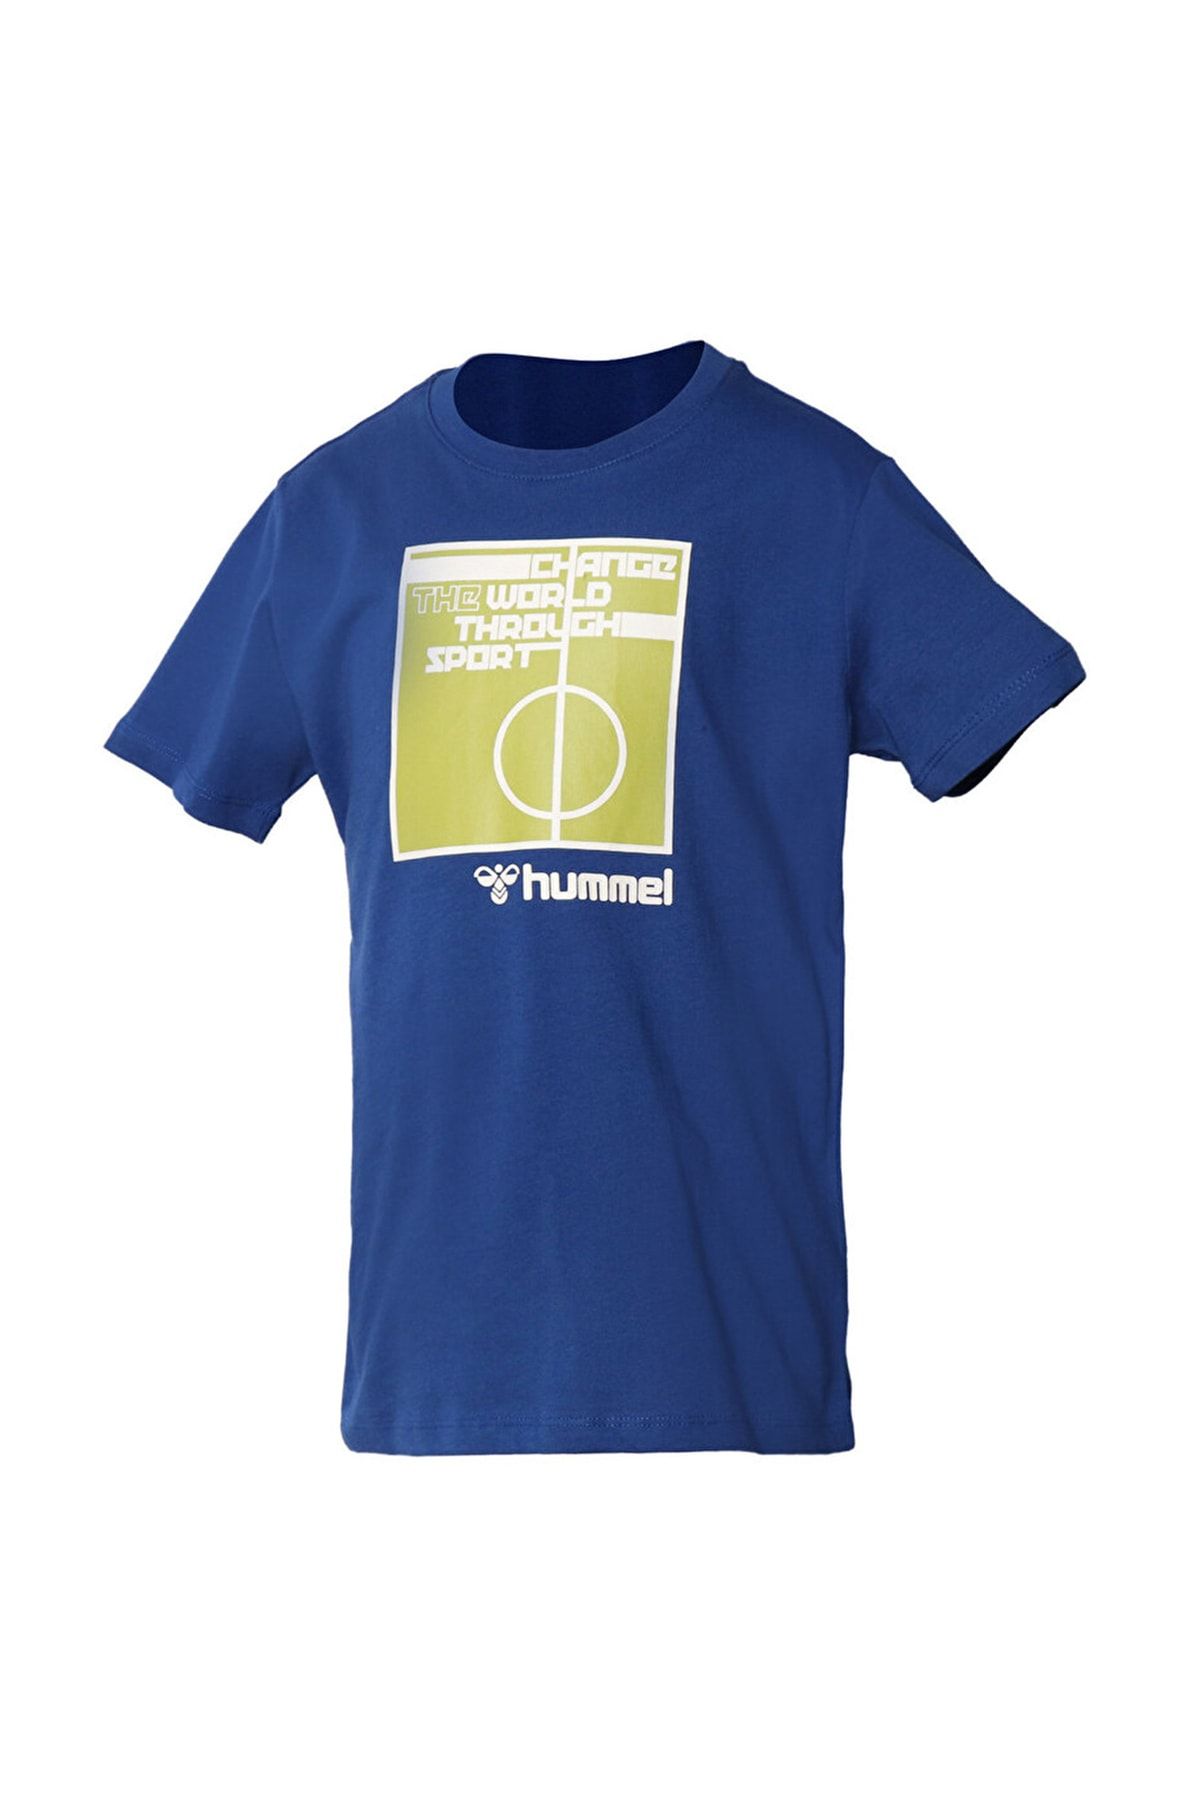 hummel Baskılı Mavi Erkek T-shirt 911598-1010 Hmlnala T-shırt S/s